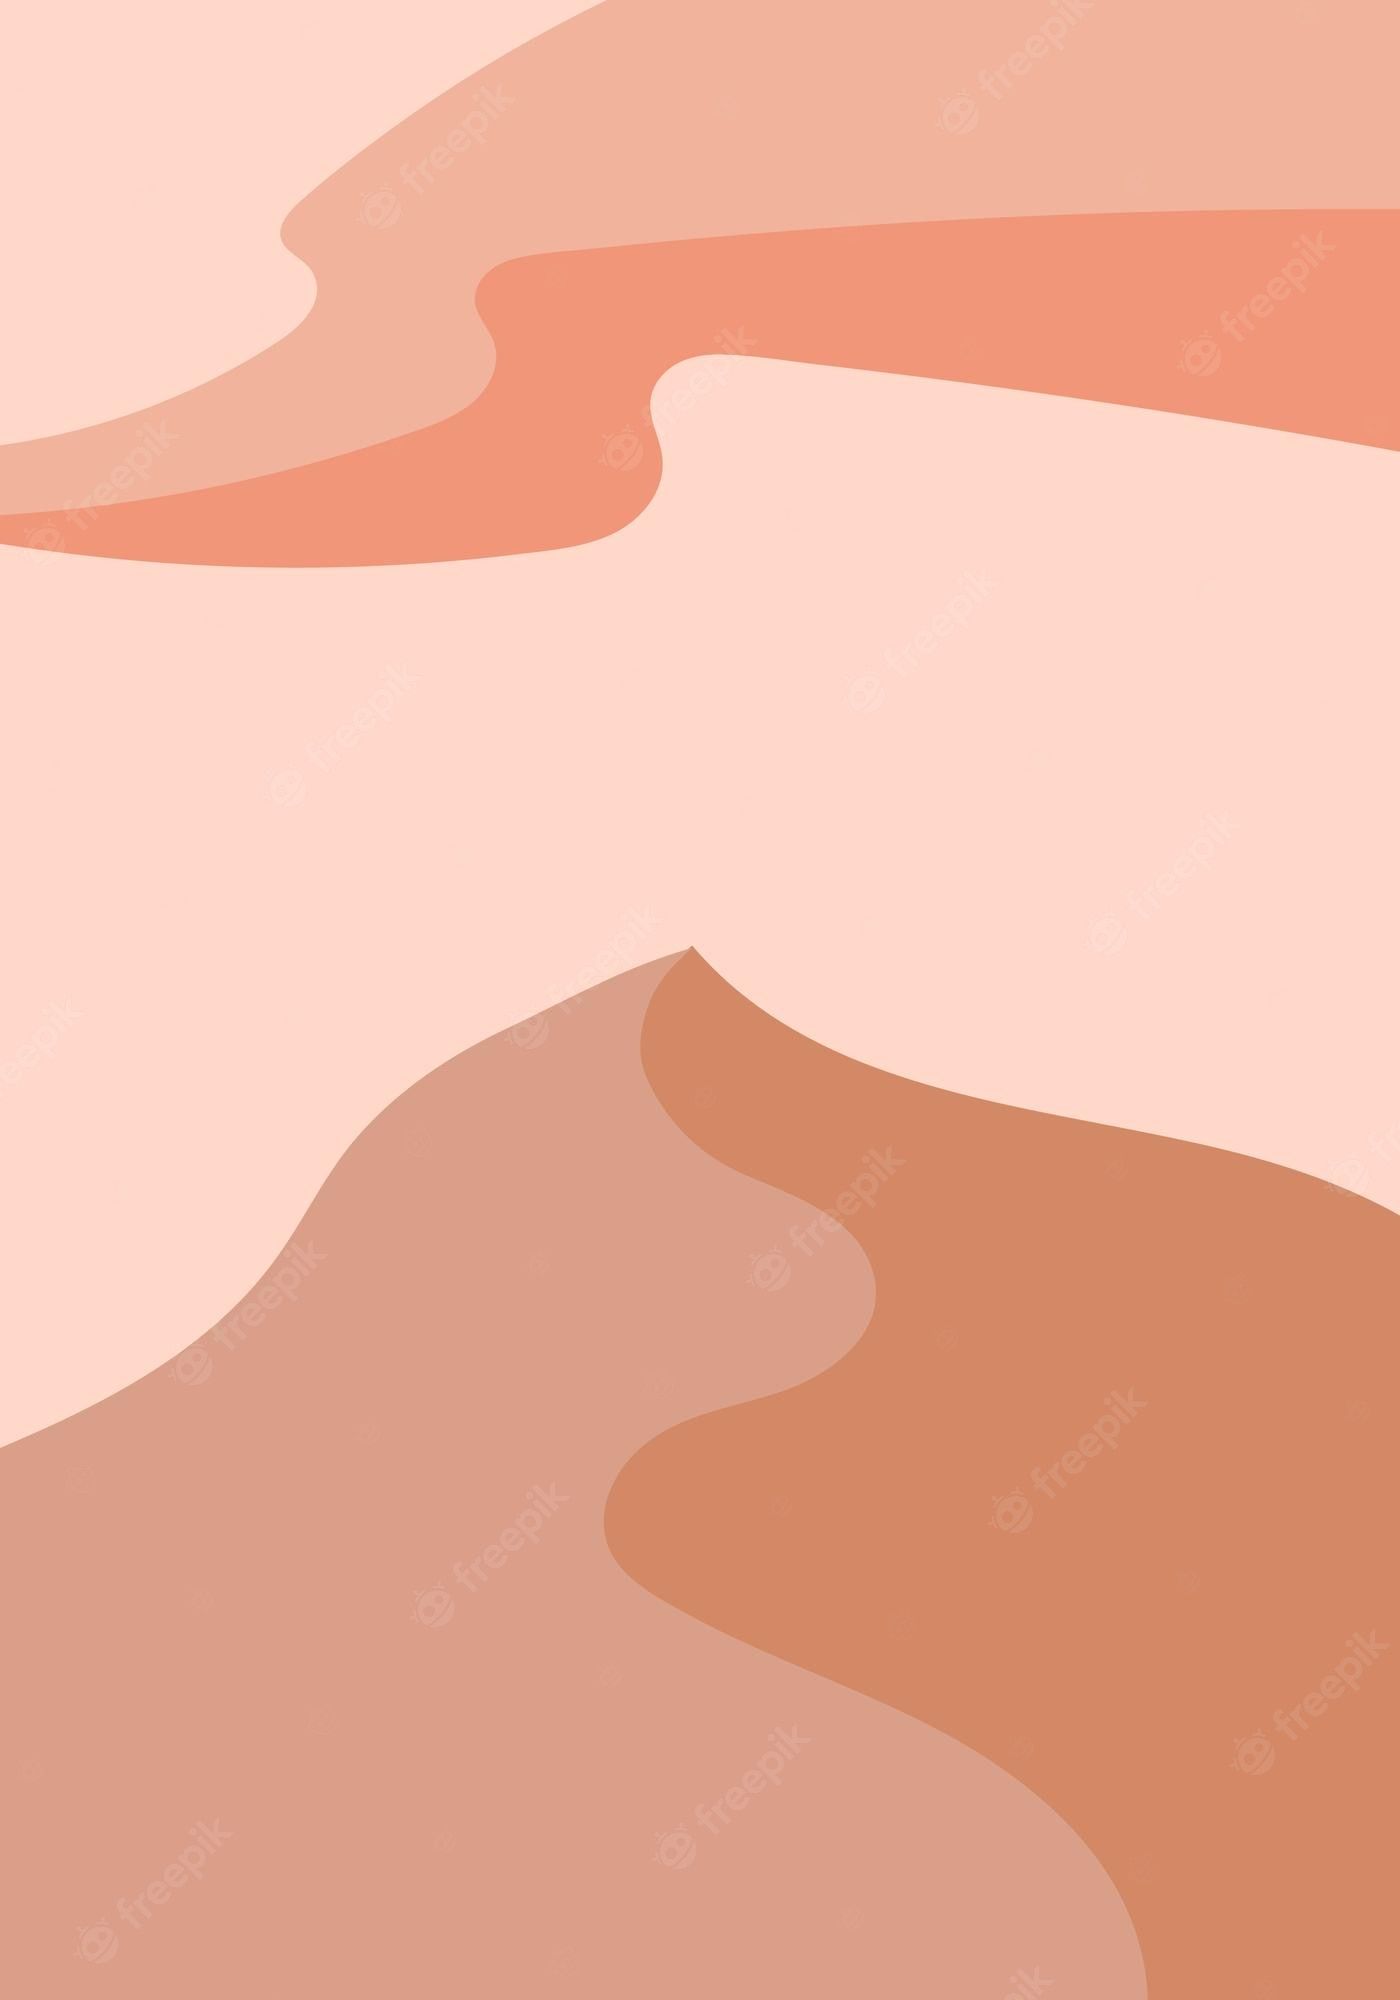 A minimalist landscape illustration of a desert with sand dunes - Sun, abstract, modern